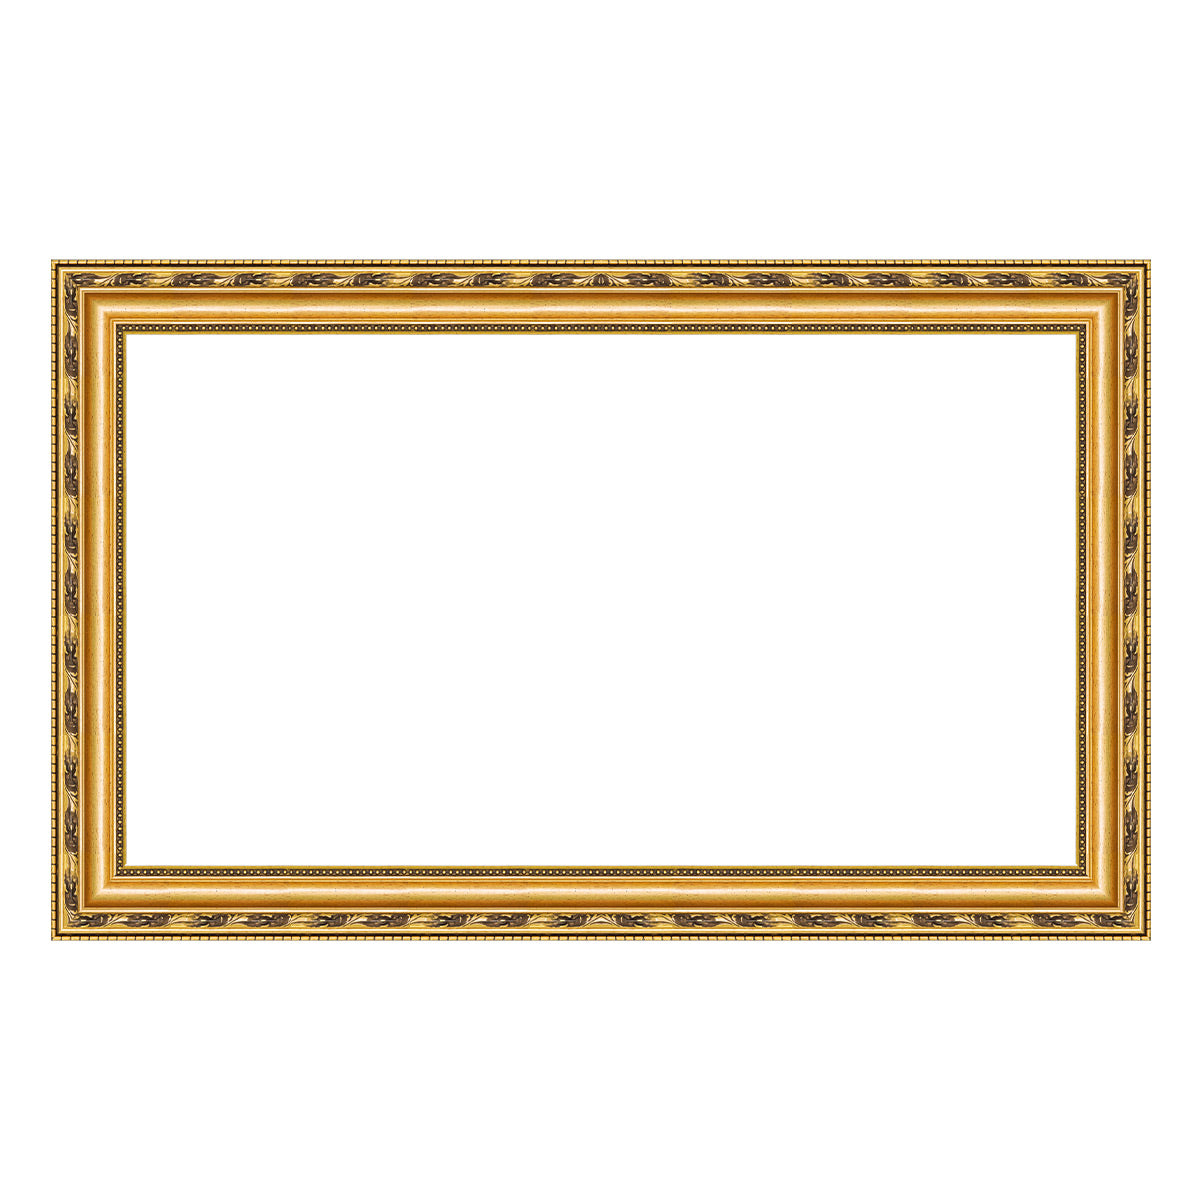 Deco TV Frames 55" Customizable Frame for Samsung The Frame TV 2021-2023 (Ornate Gold)